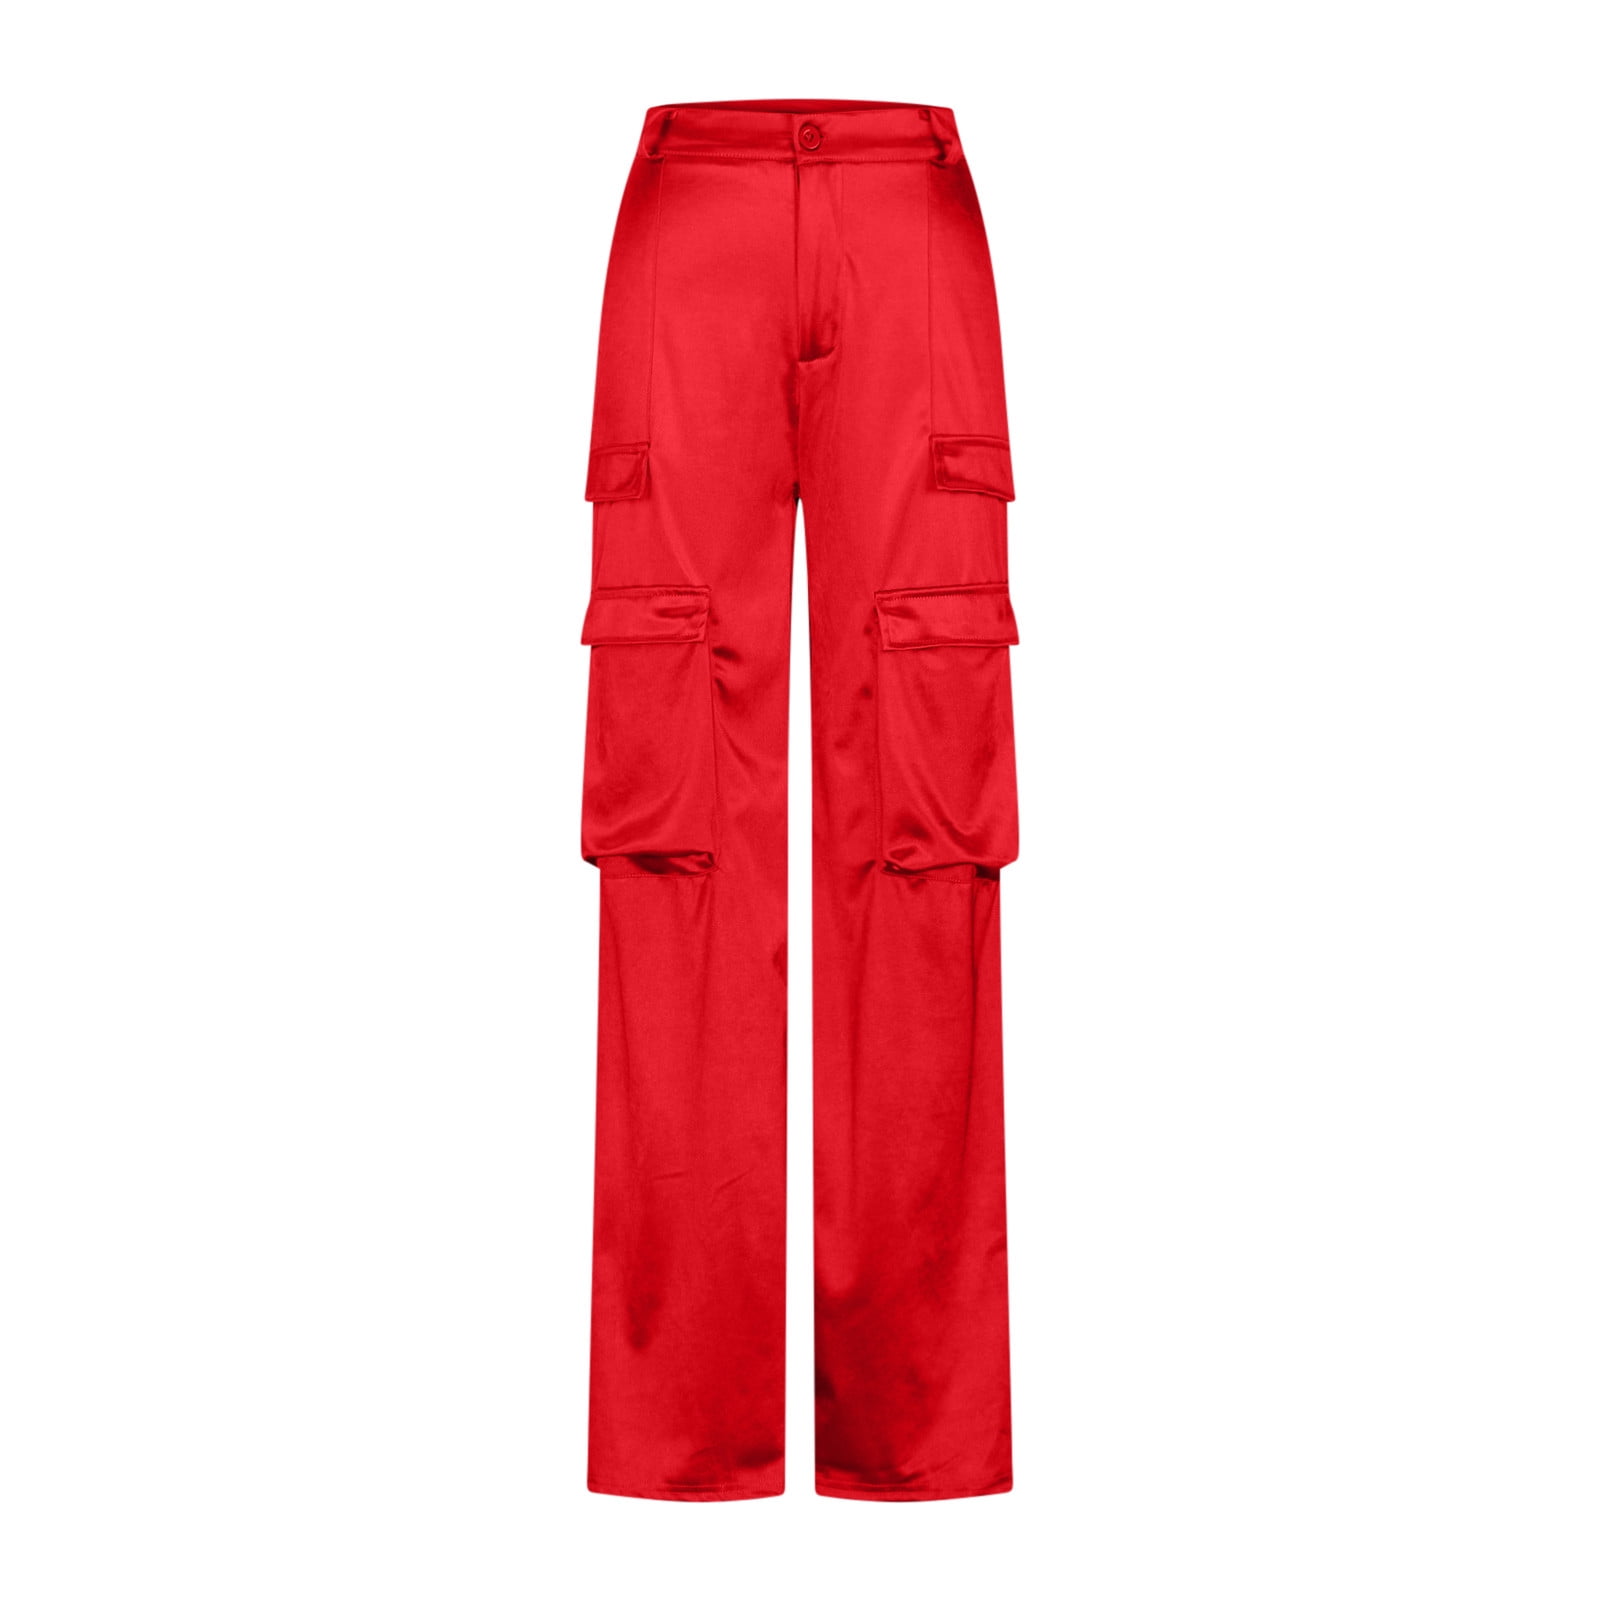 XFLWAM Satin Cargo Pants for Women High Waist Multiple Pockets